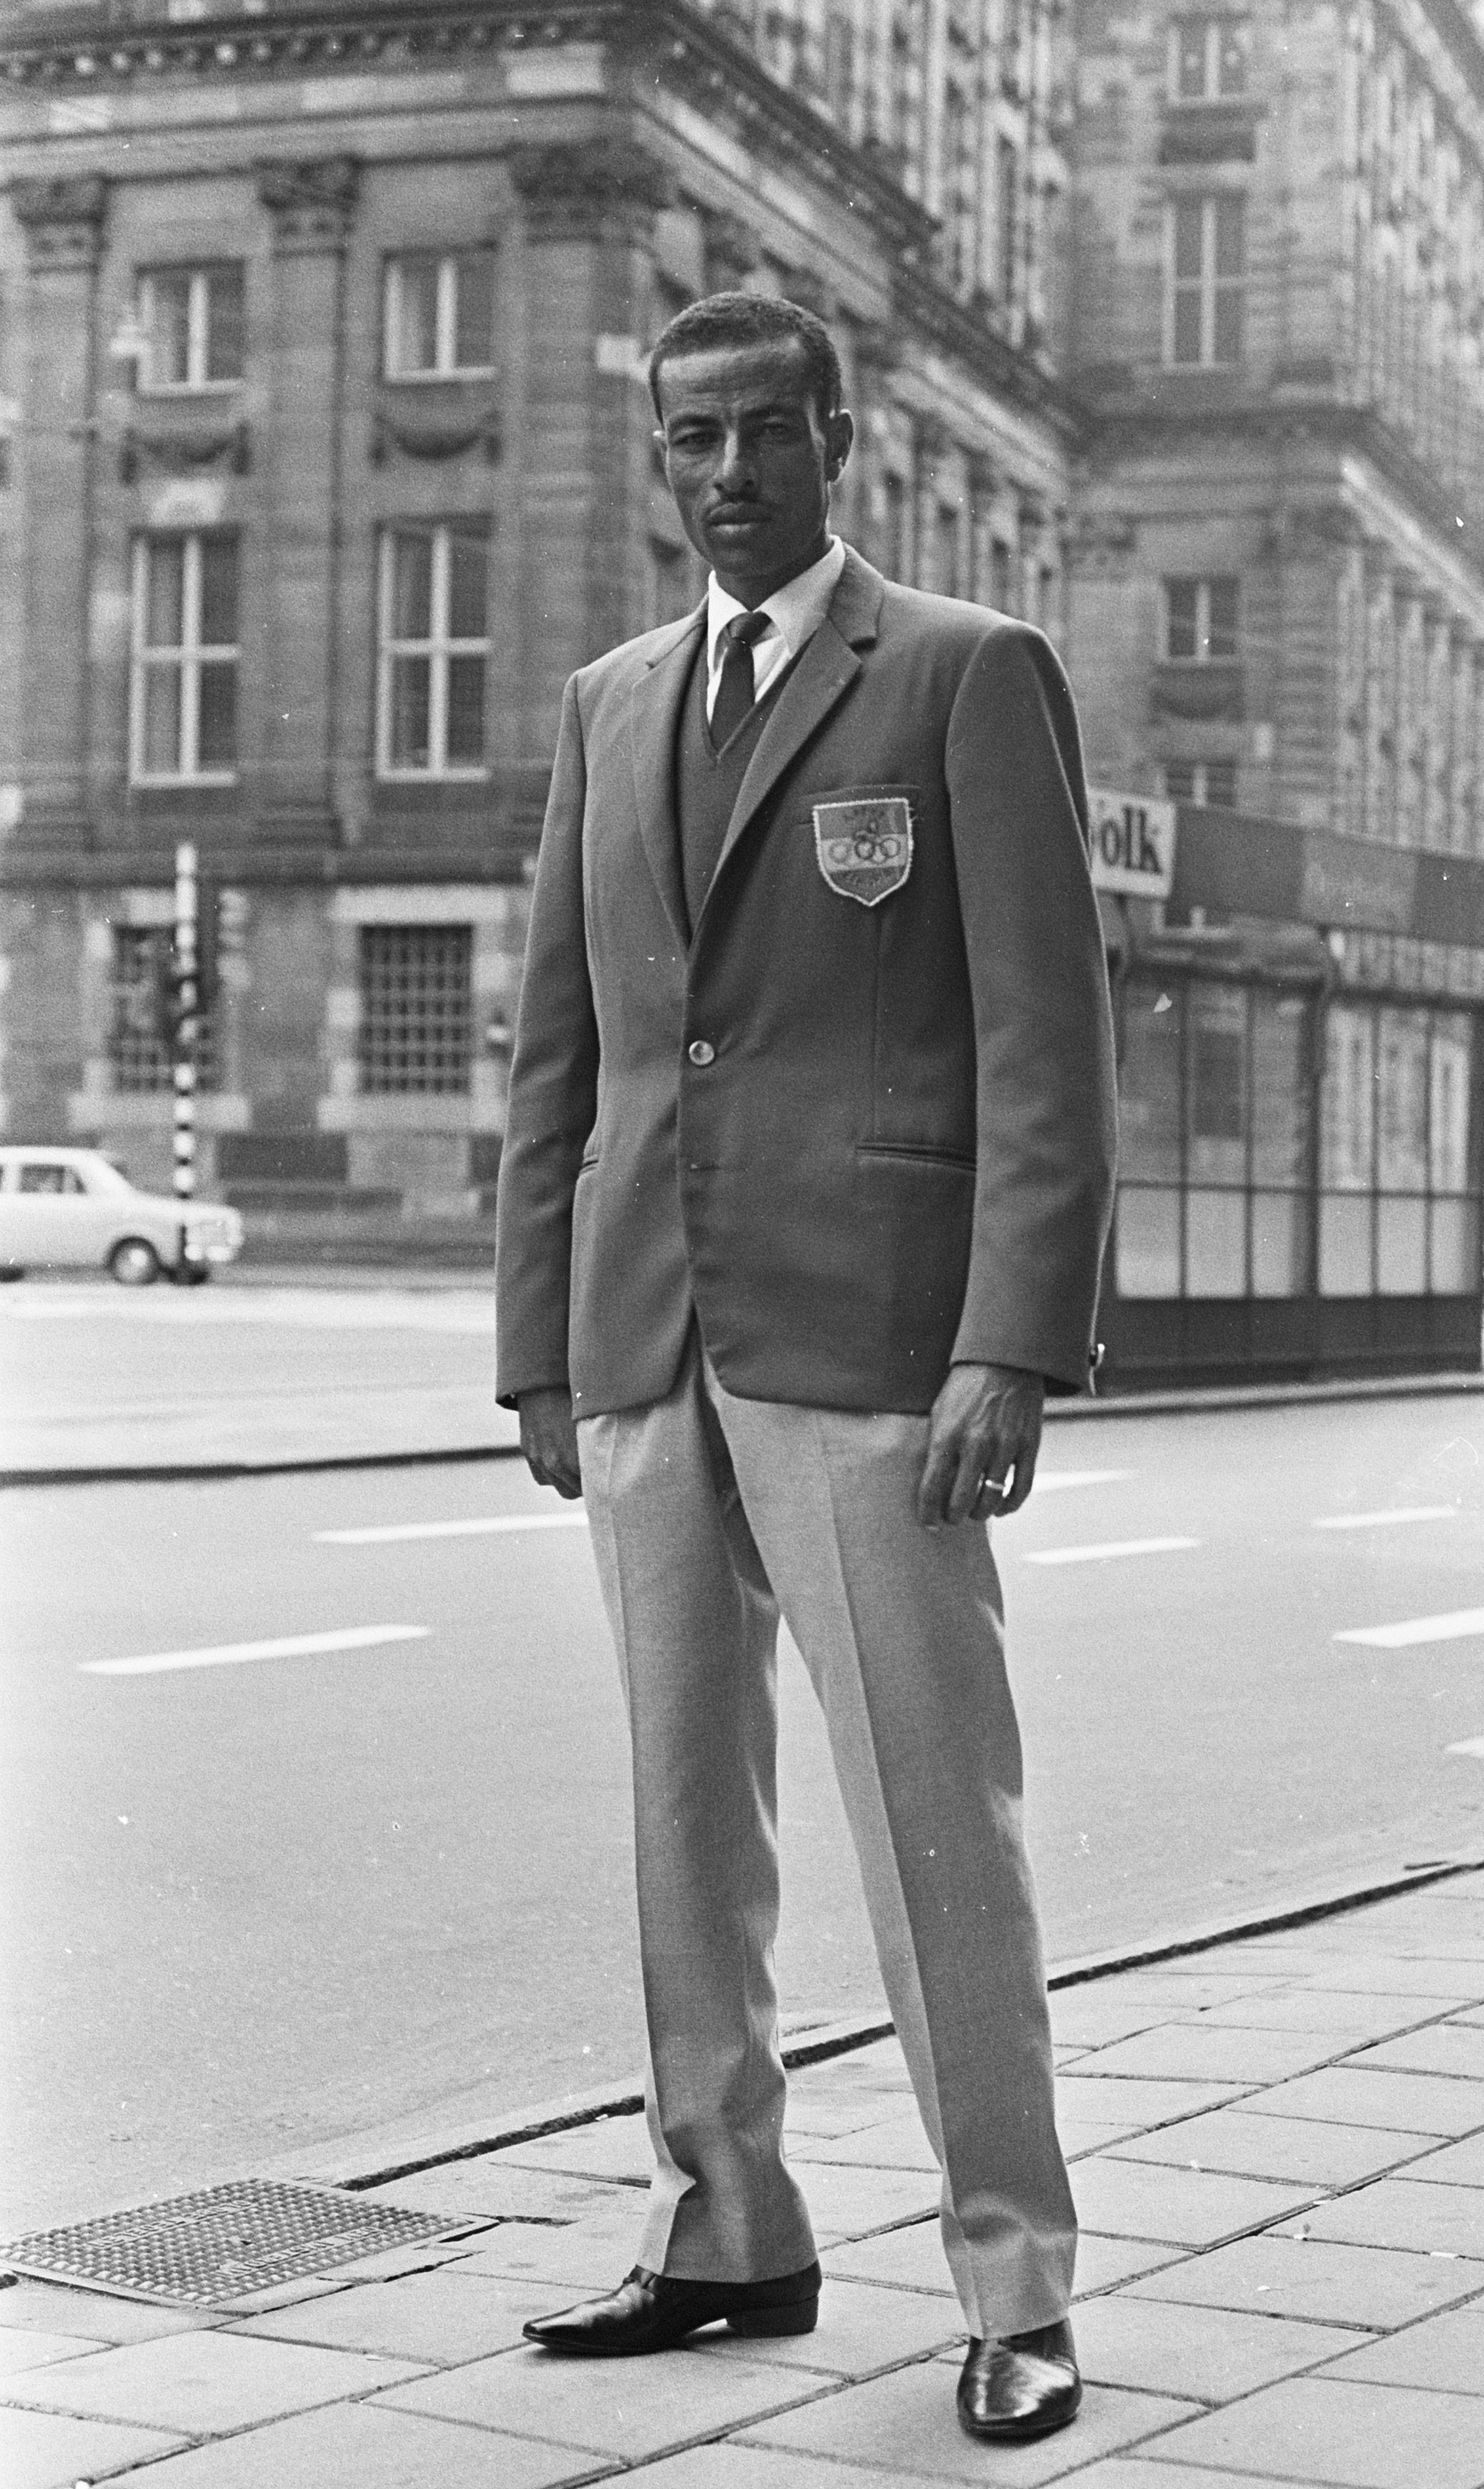 1960: Ethiopian Marathon Runner Abebe Bikila Won the Olympics Barefoot